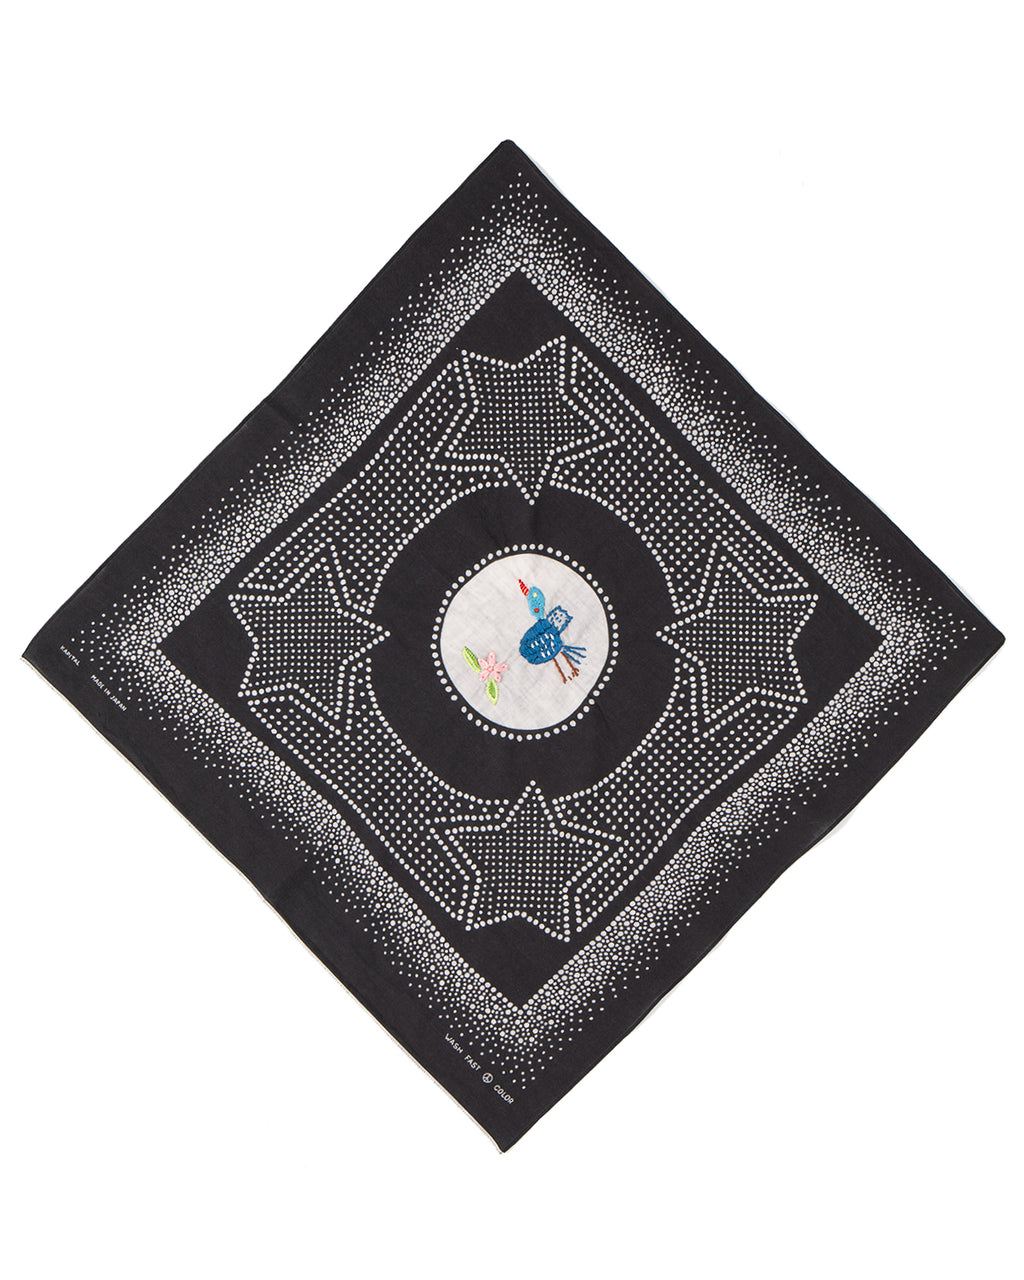 Kapital Fastcolor Selvedge Bandana, Magpie Embroidery, Black